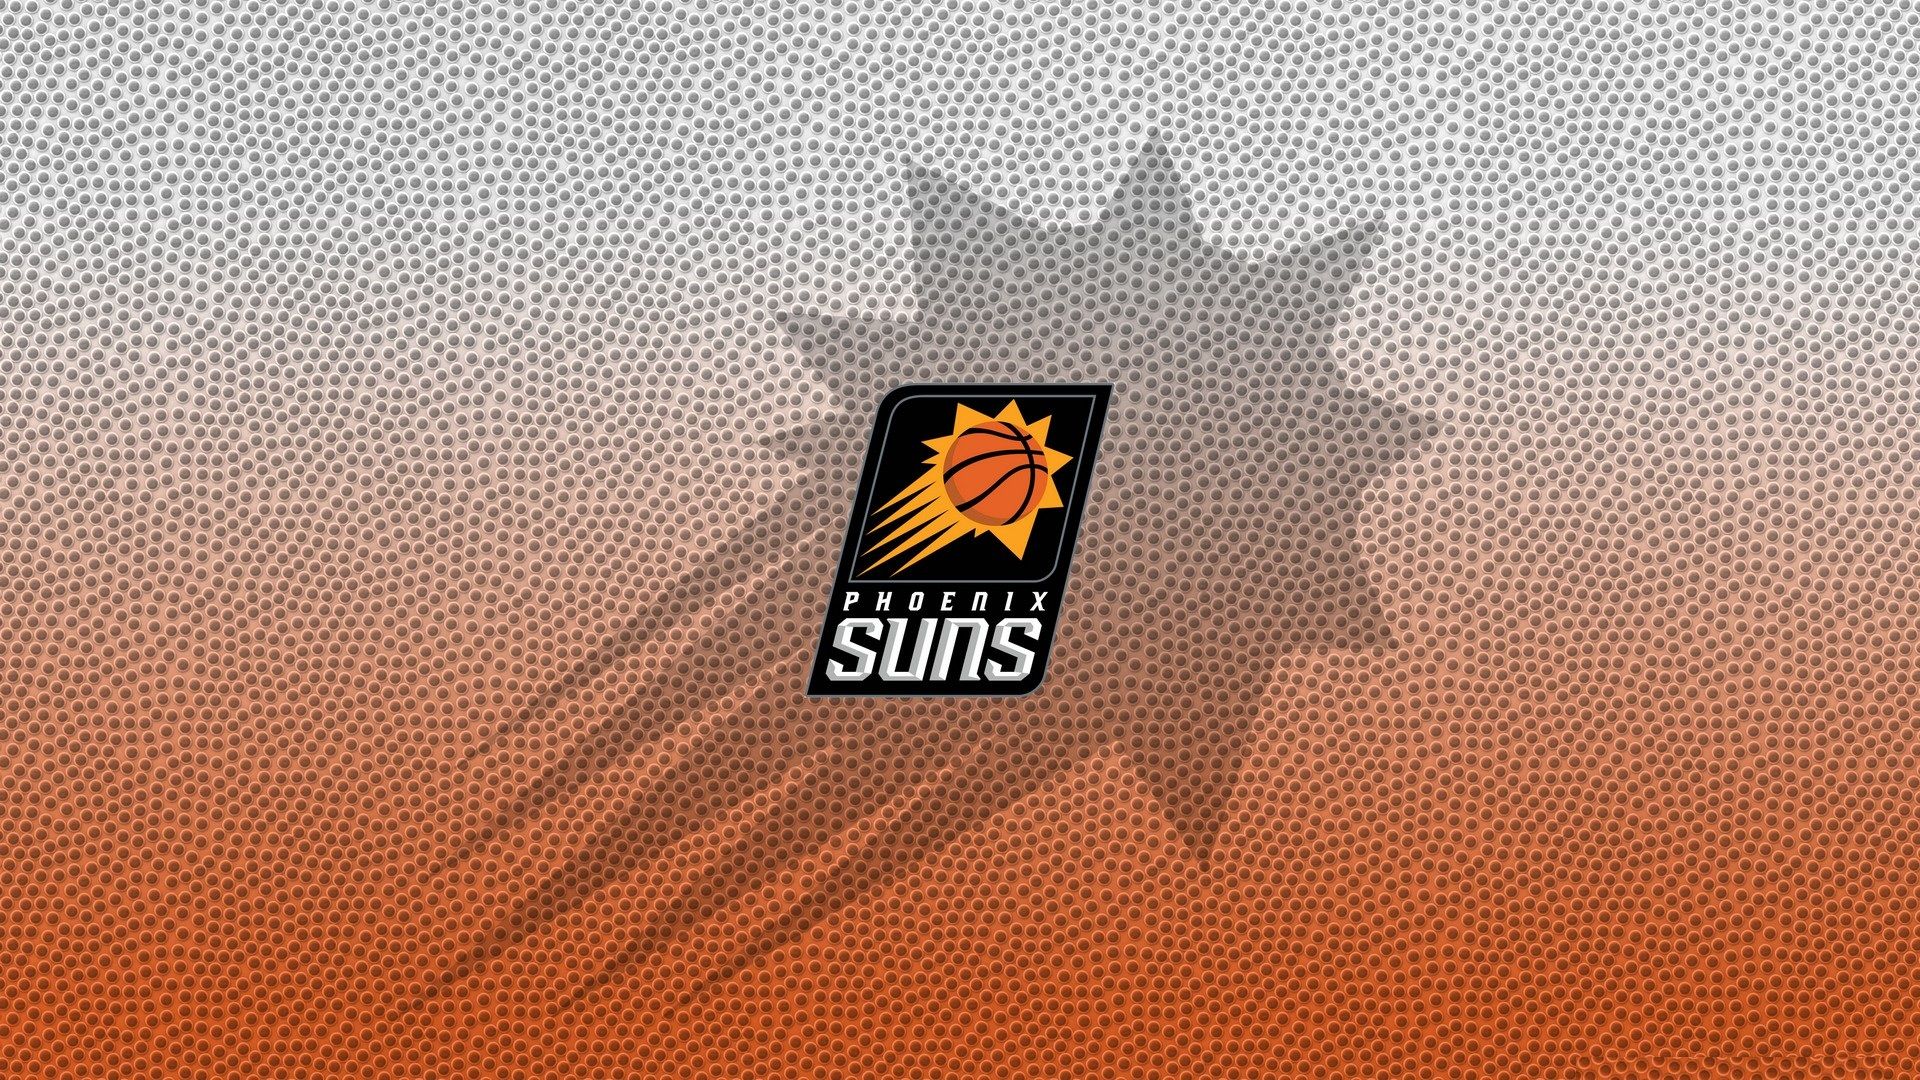 Phoenix Suns 2021 Wallpapers - Wallpaper Cave